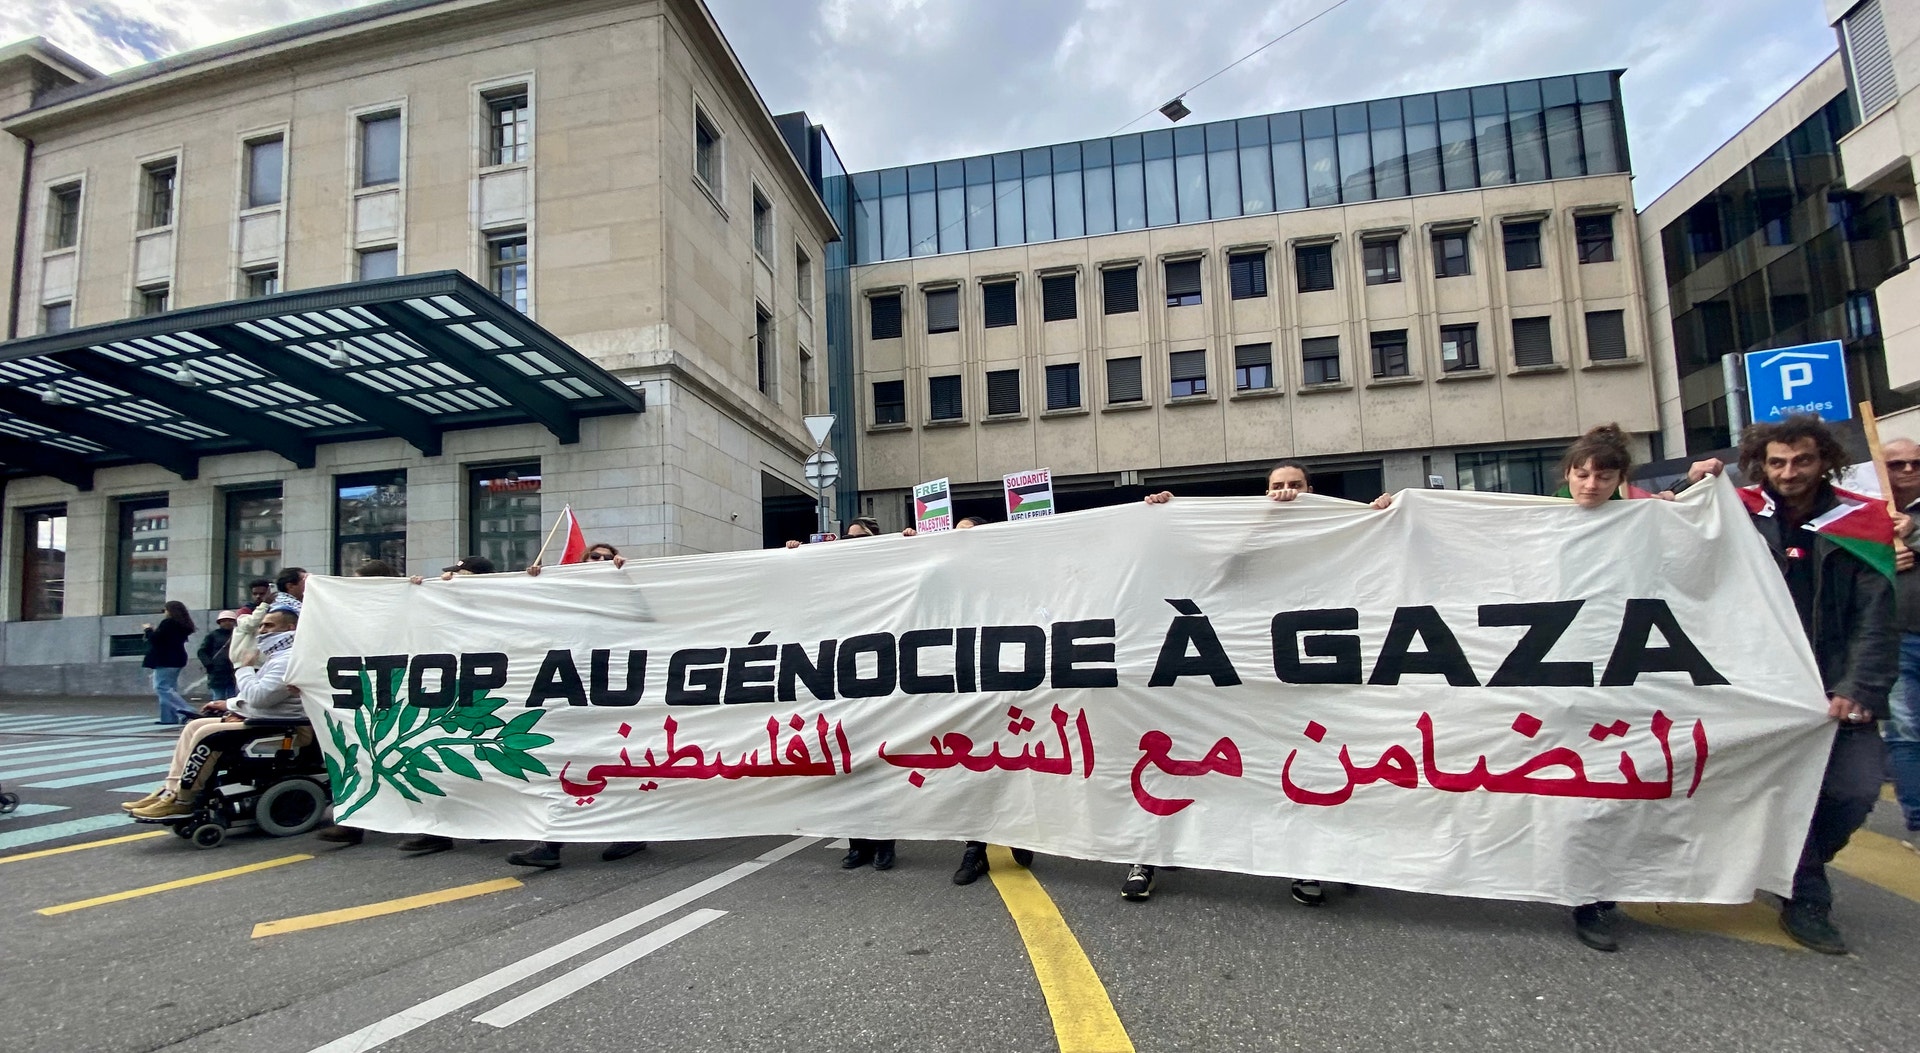  Protesto em Genebra. Foto: Rachel Mestre Mesquita - RTP 